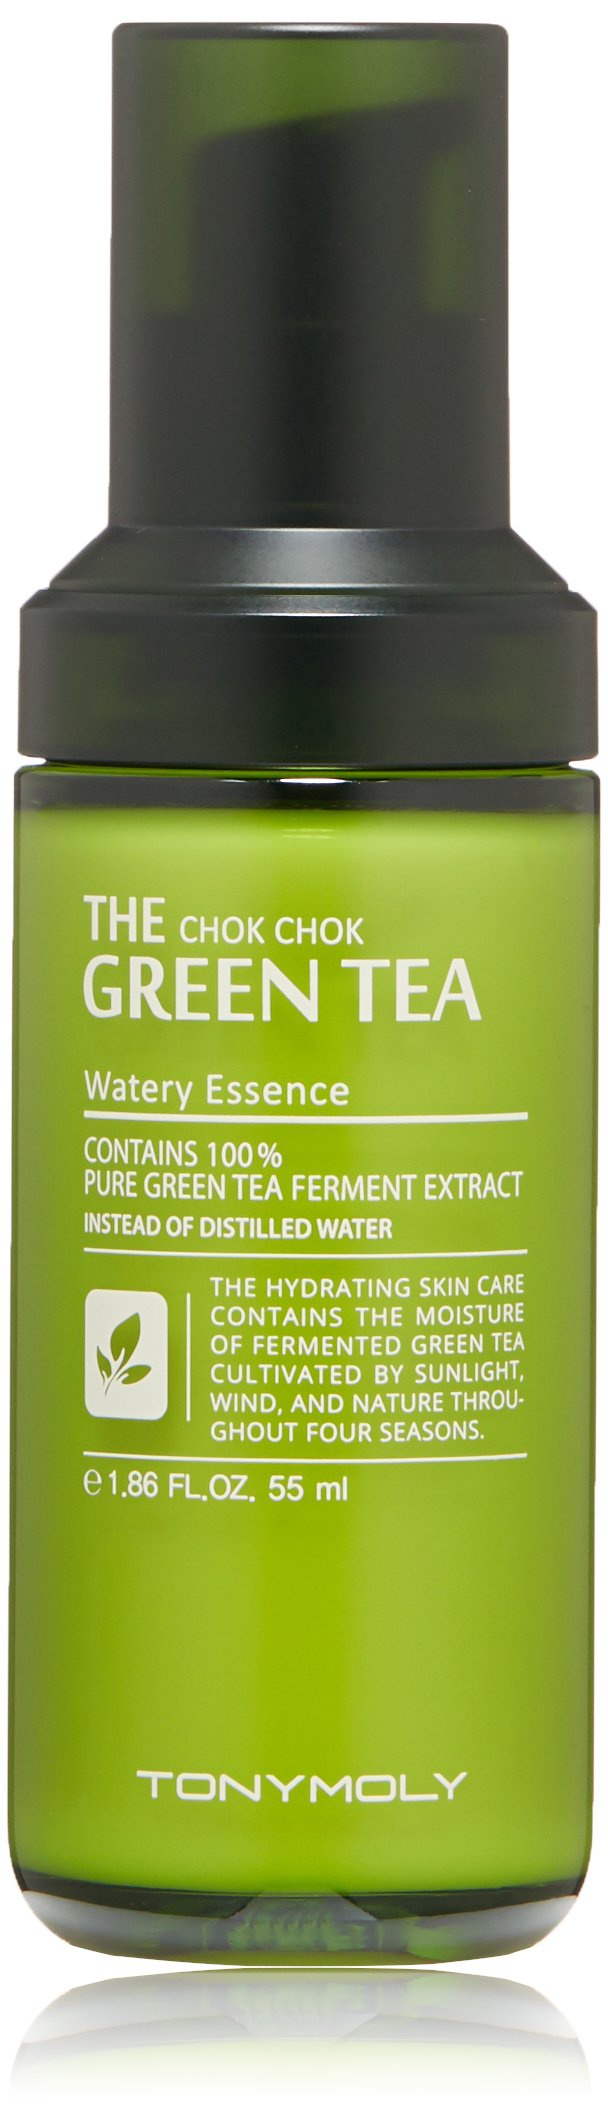 TonyMoly The Chok Chok Green Tea Watery Essence